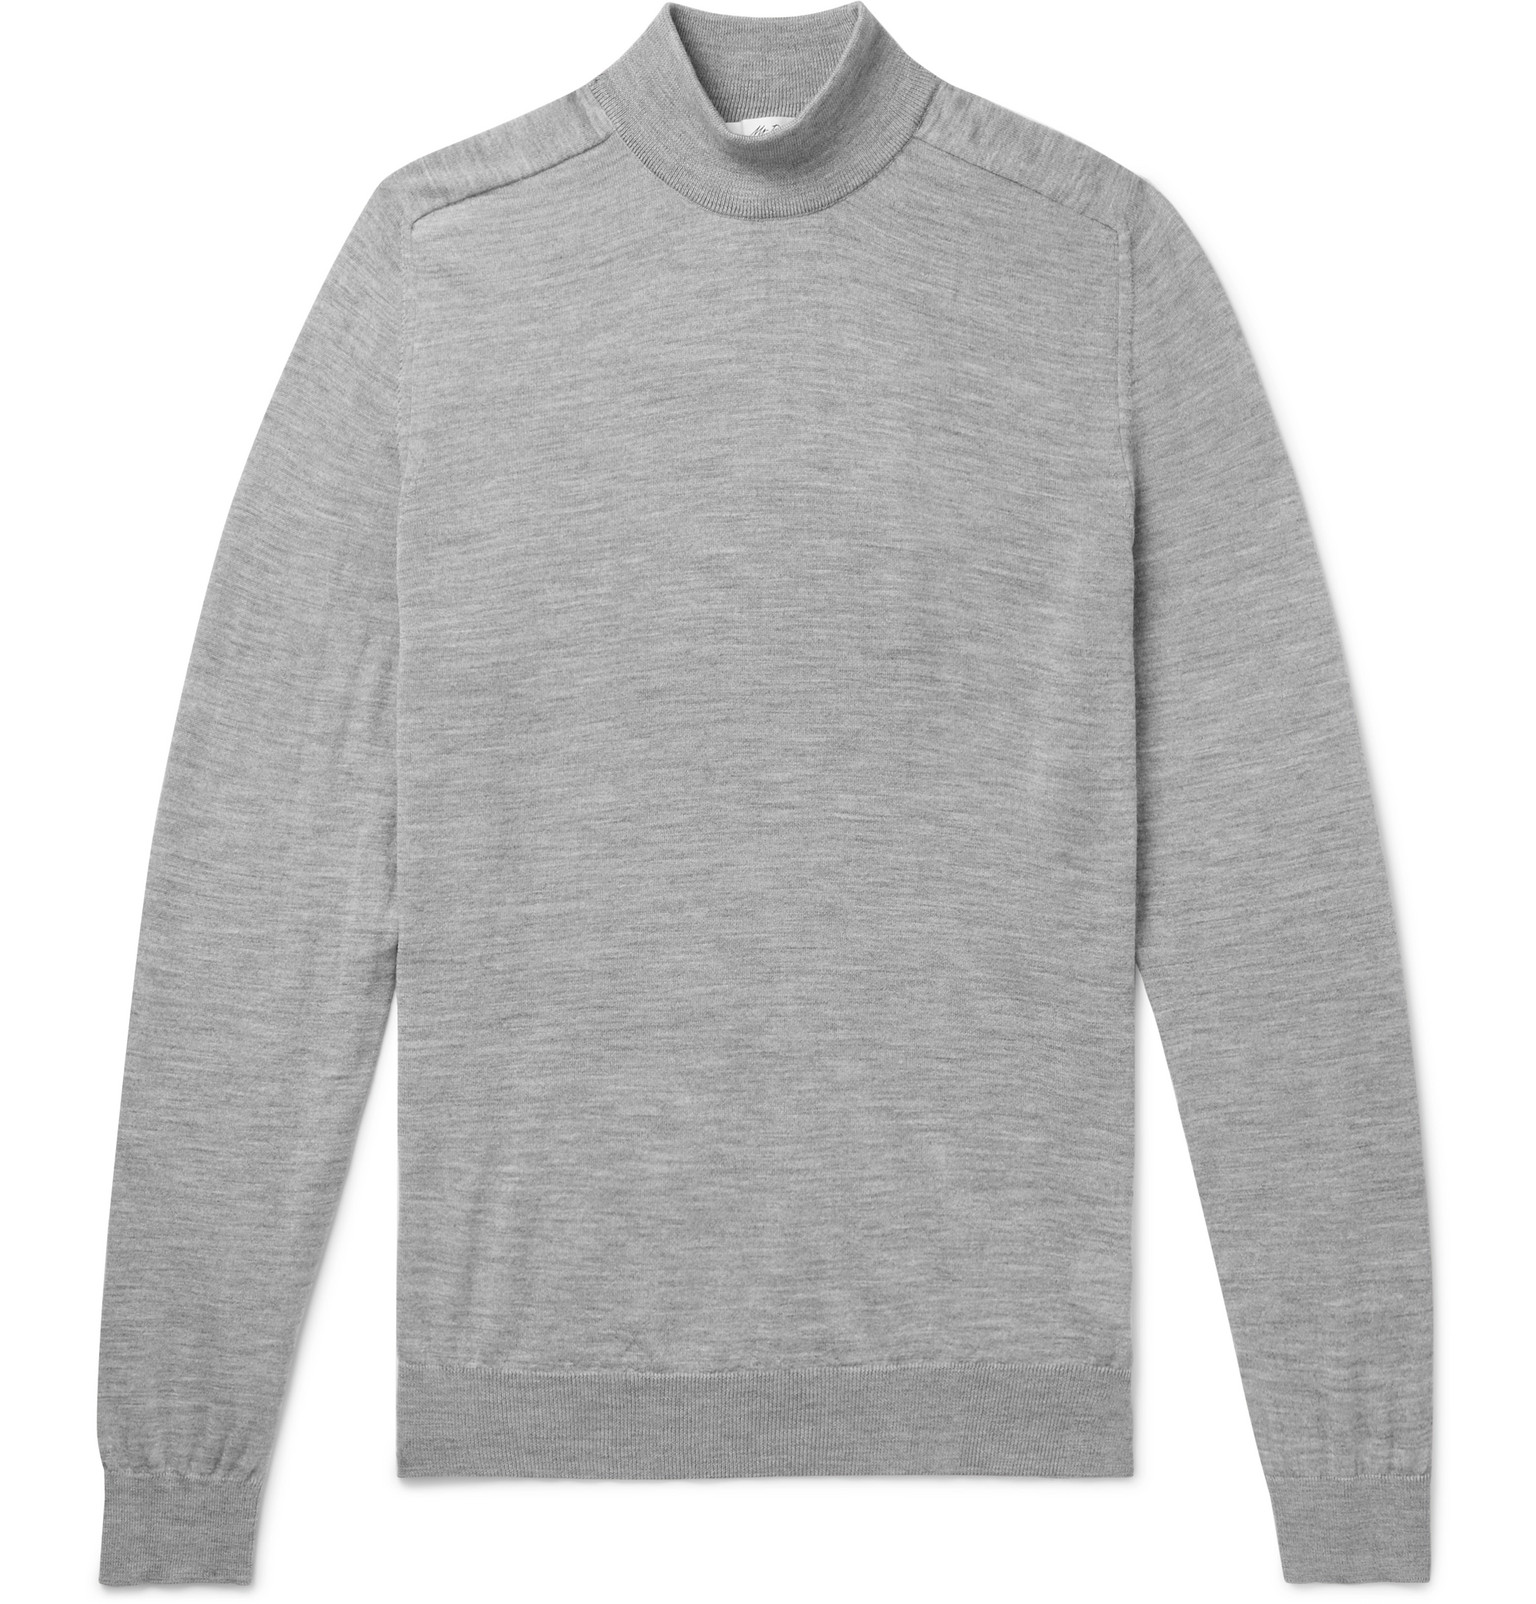 Mr P. - Mélange Merino Wool Mock-Neck Sweater - Men - Gray | The